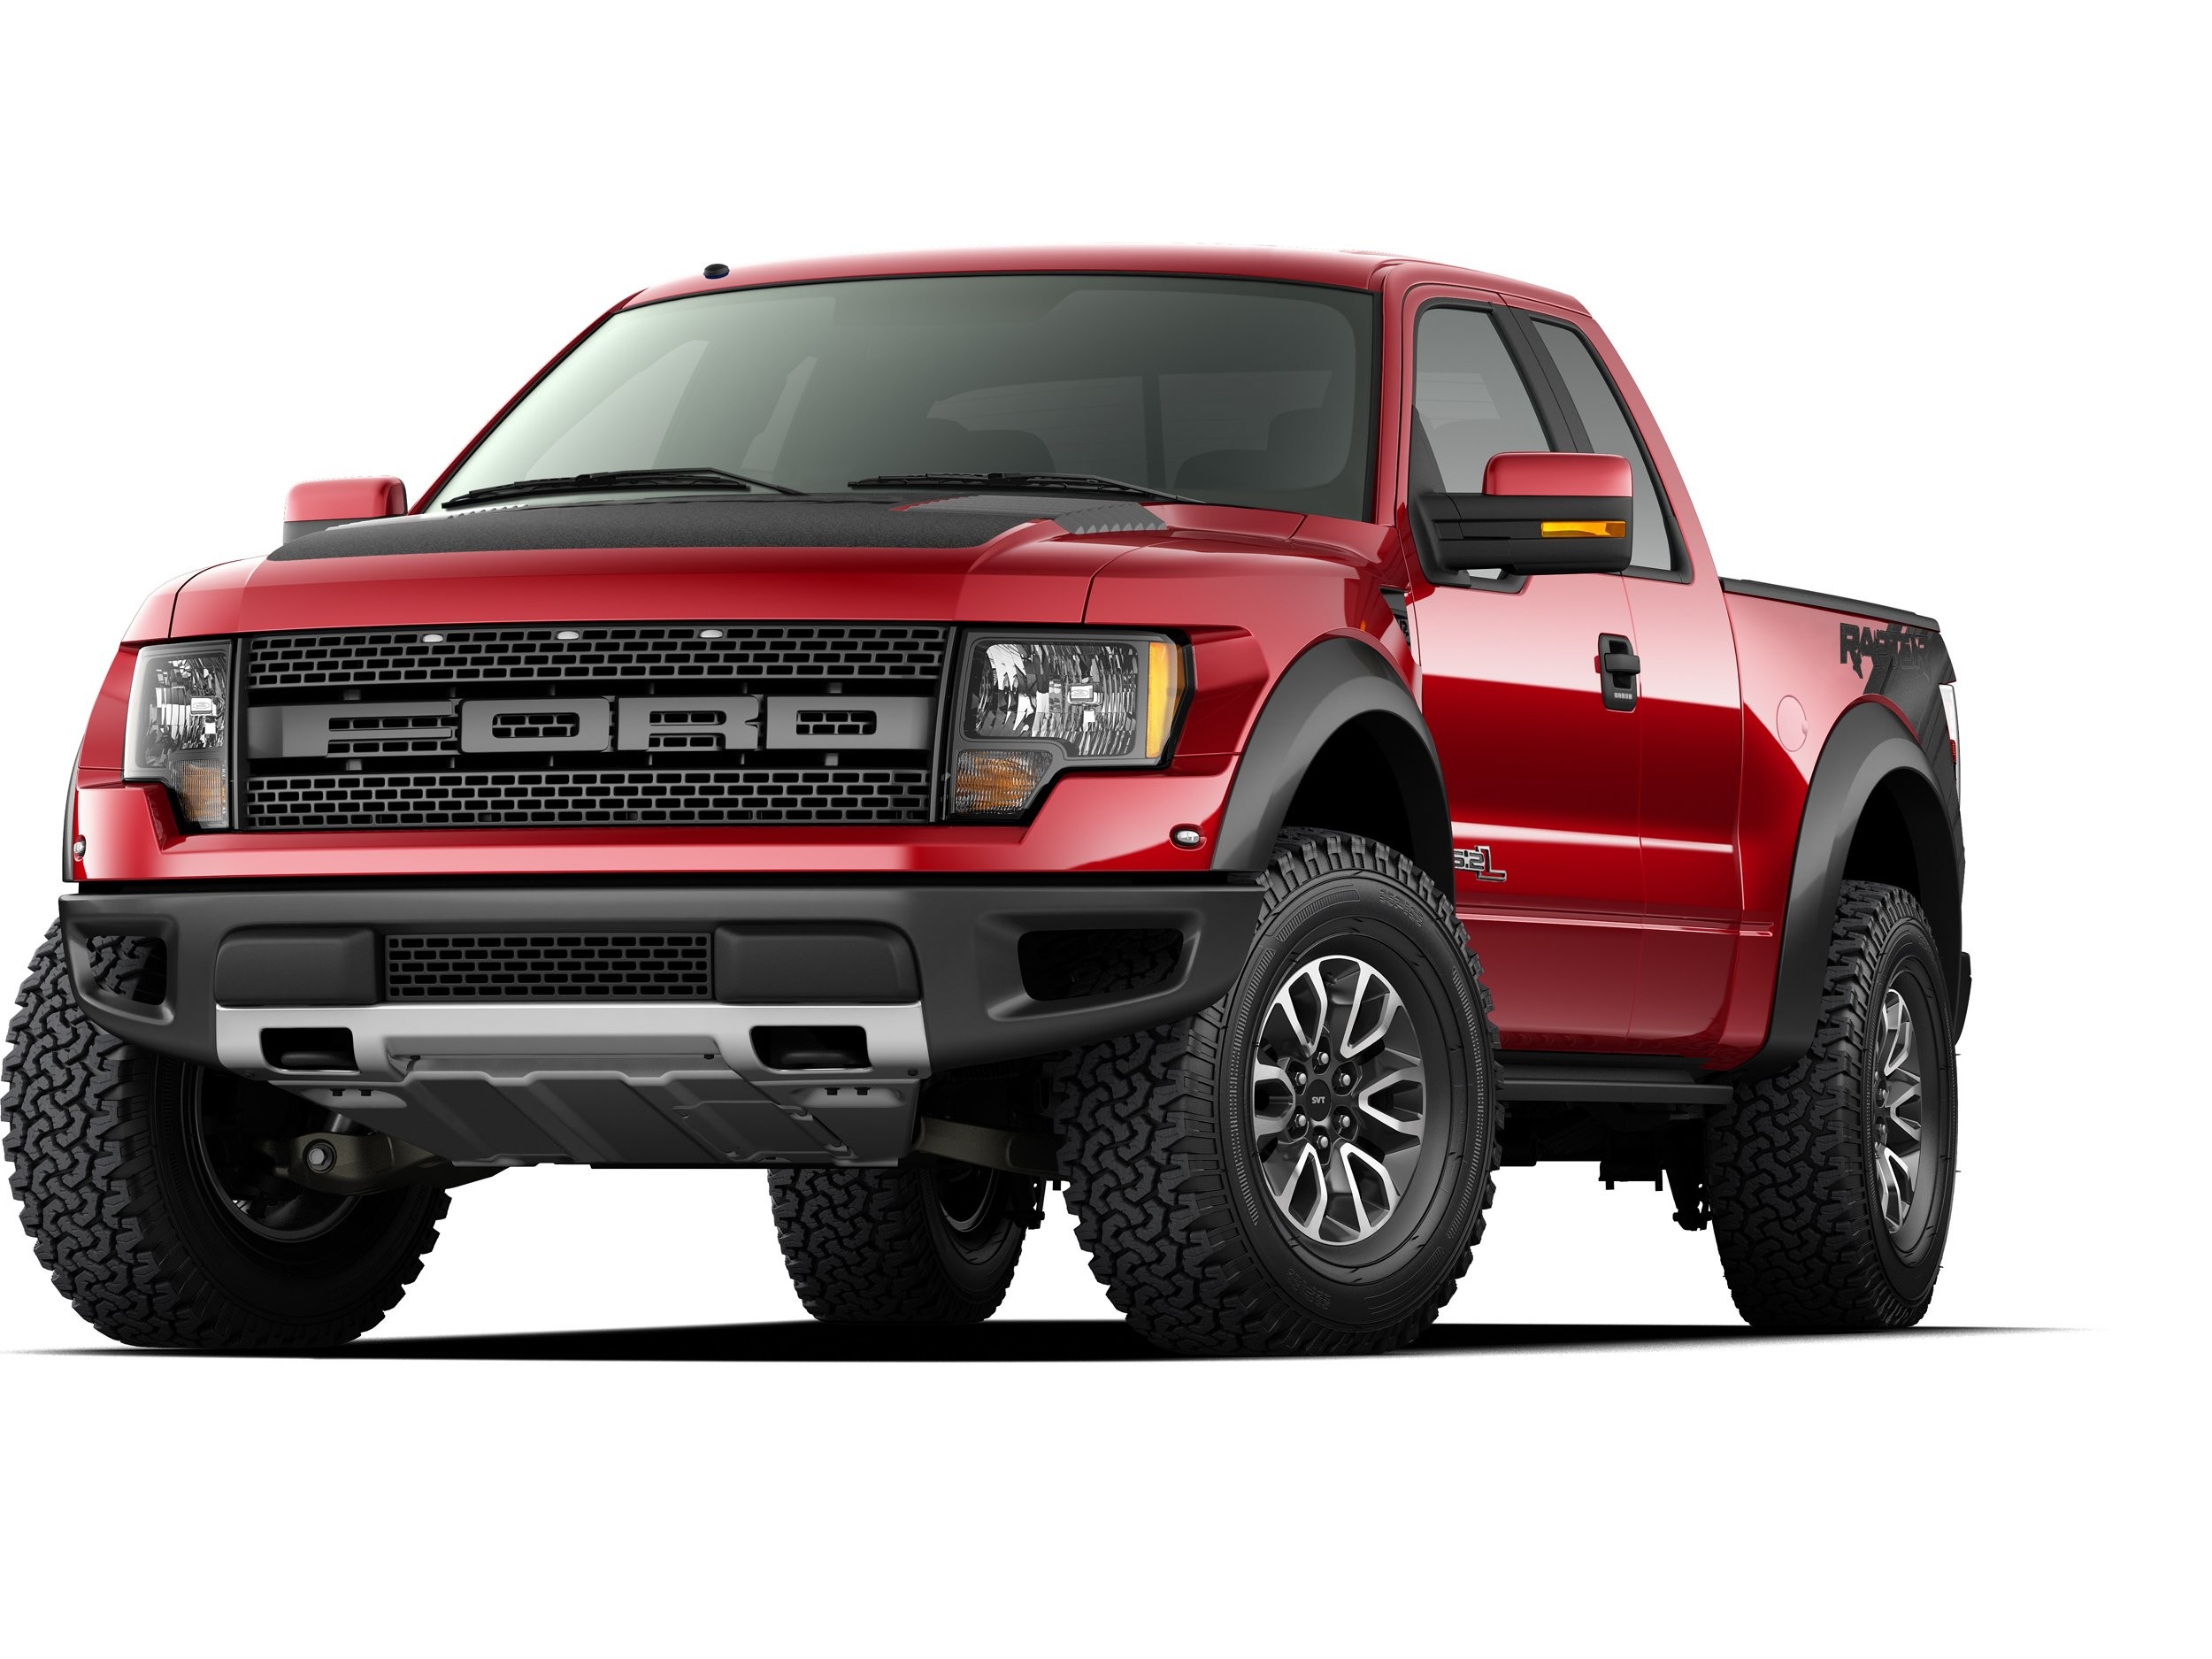 2500x1875 2015 Ford Ranger Desktop Backgrounds